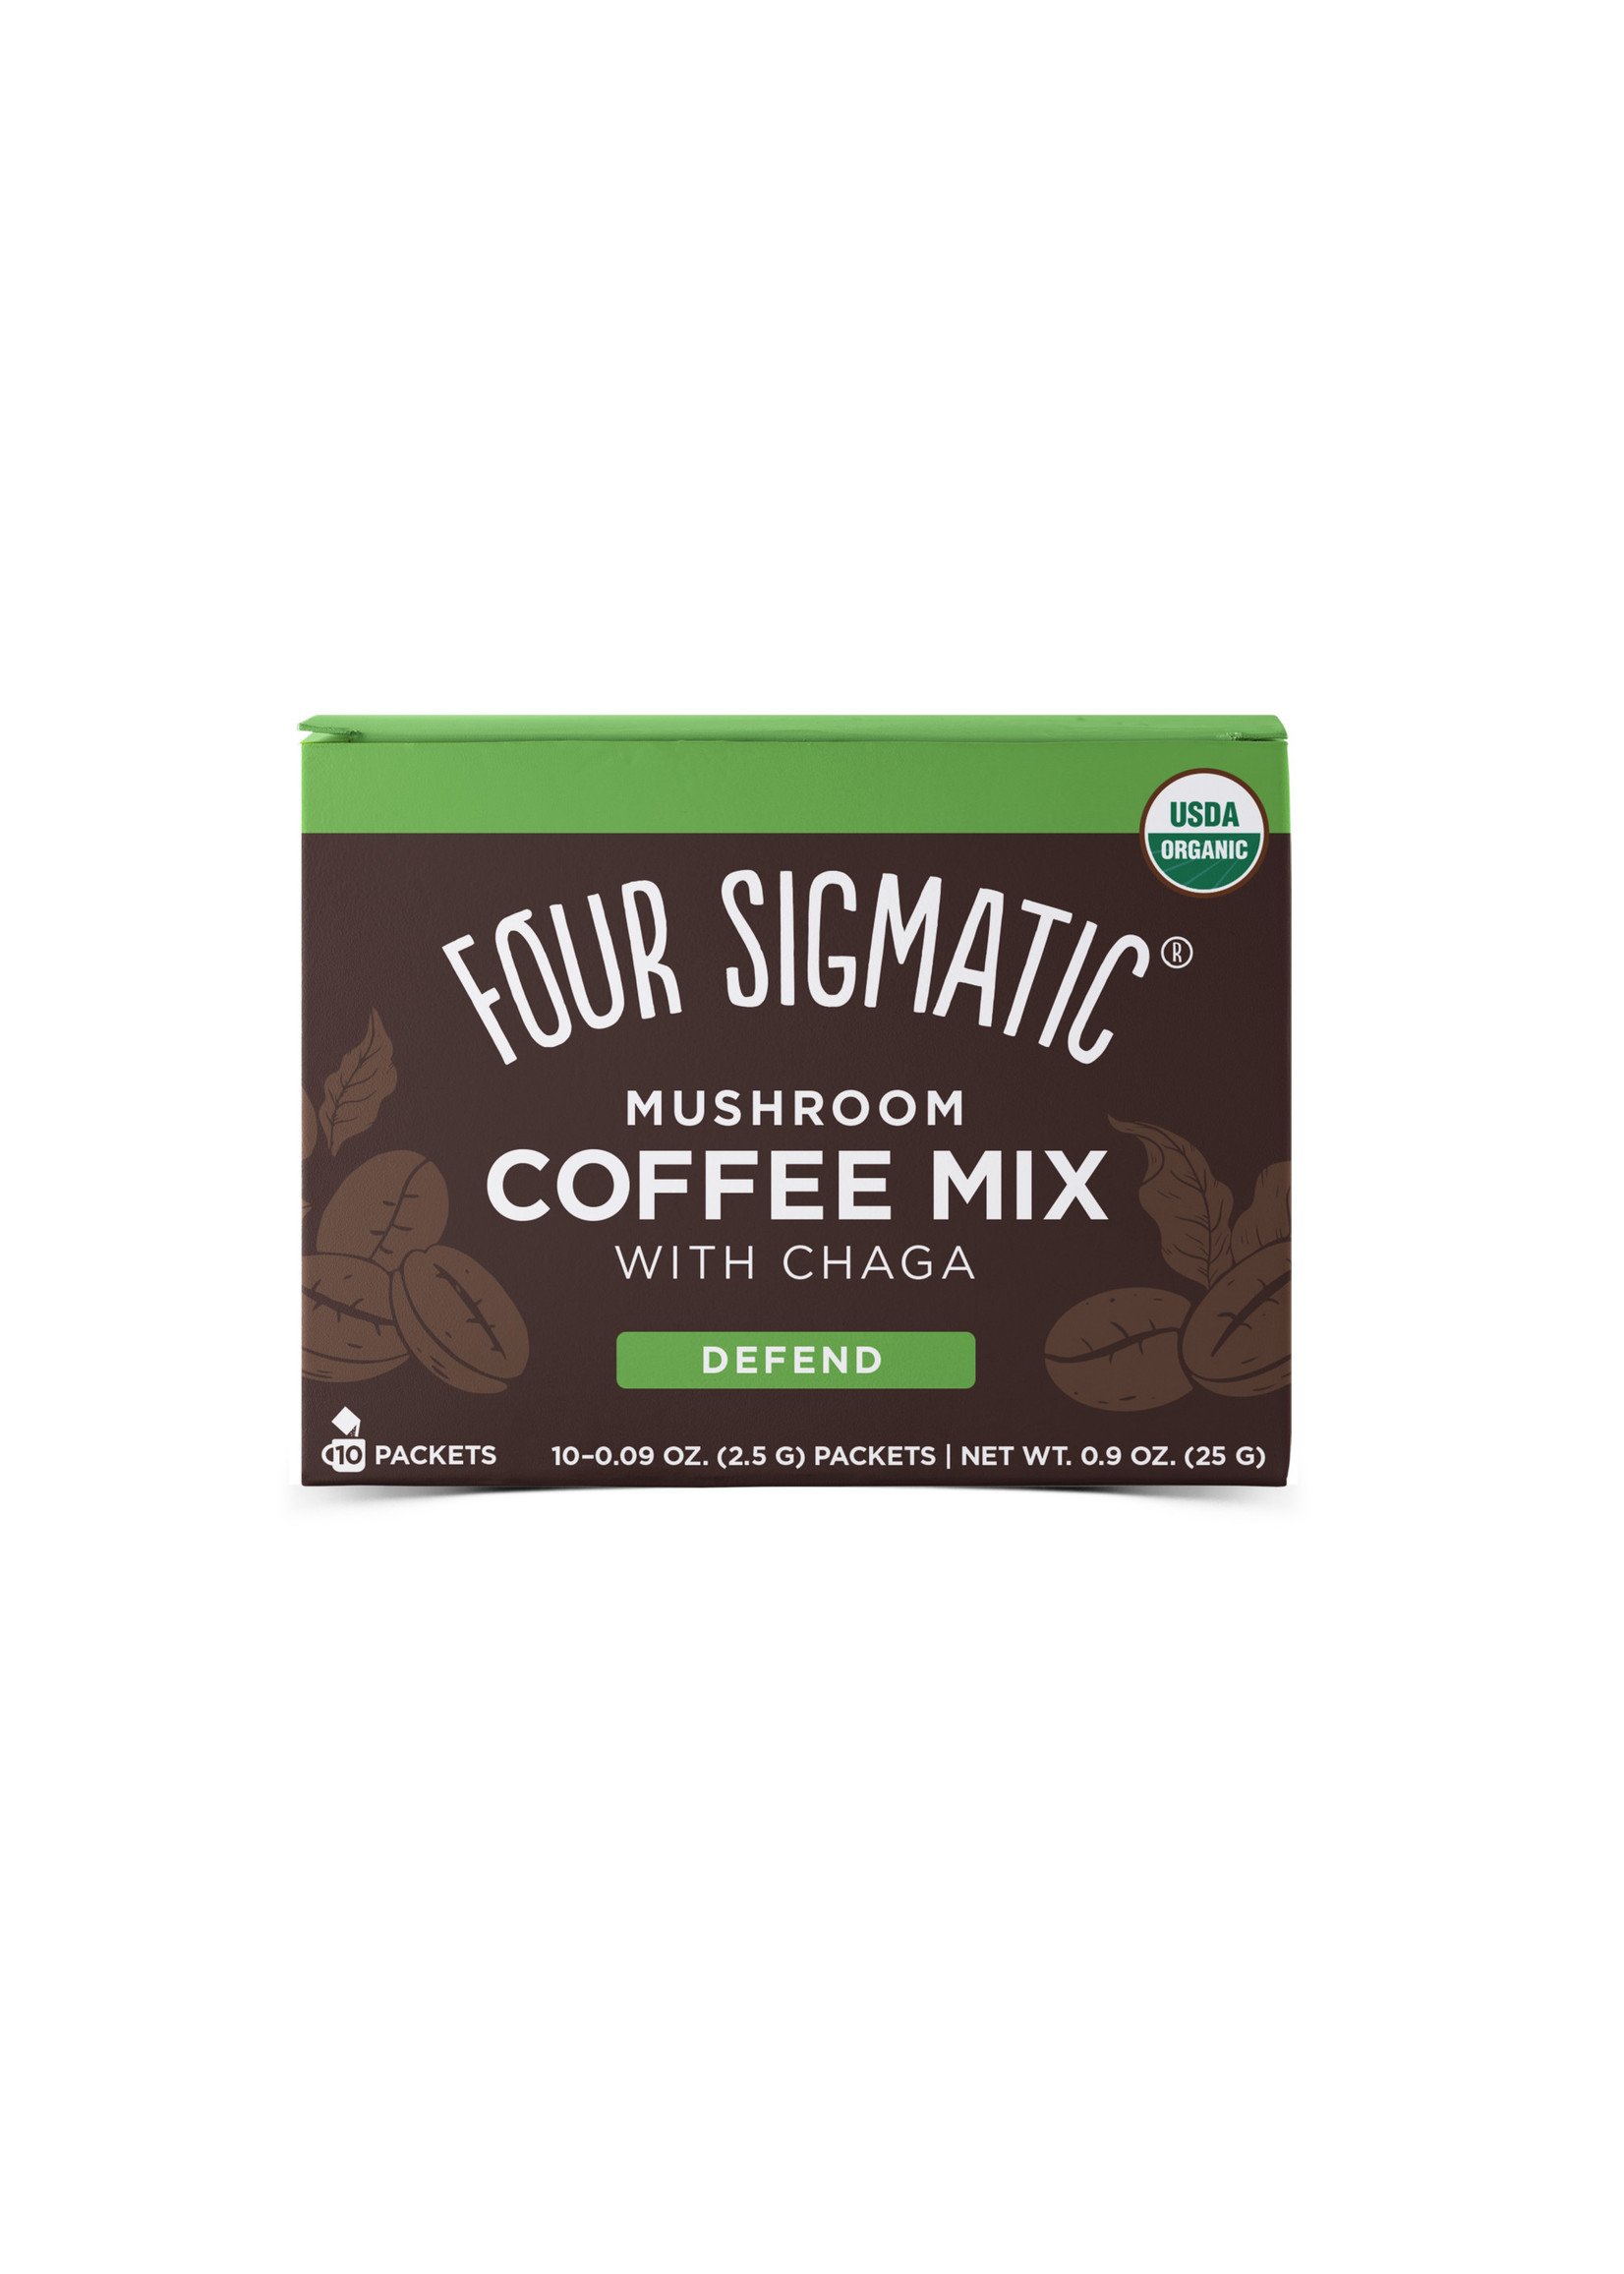 Four Sigmatic Four Sigmatic Mushroom Coffee Mix With Chaga (Defend) 10 ct.